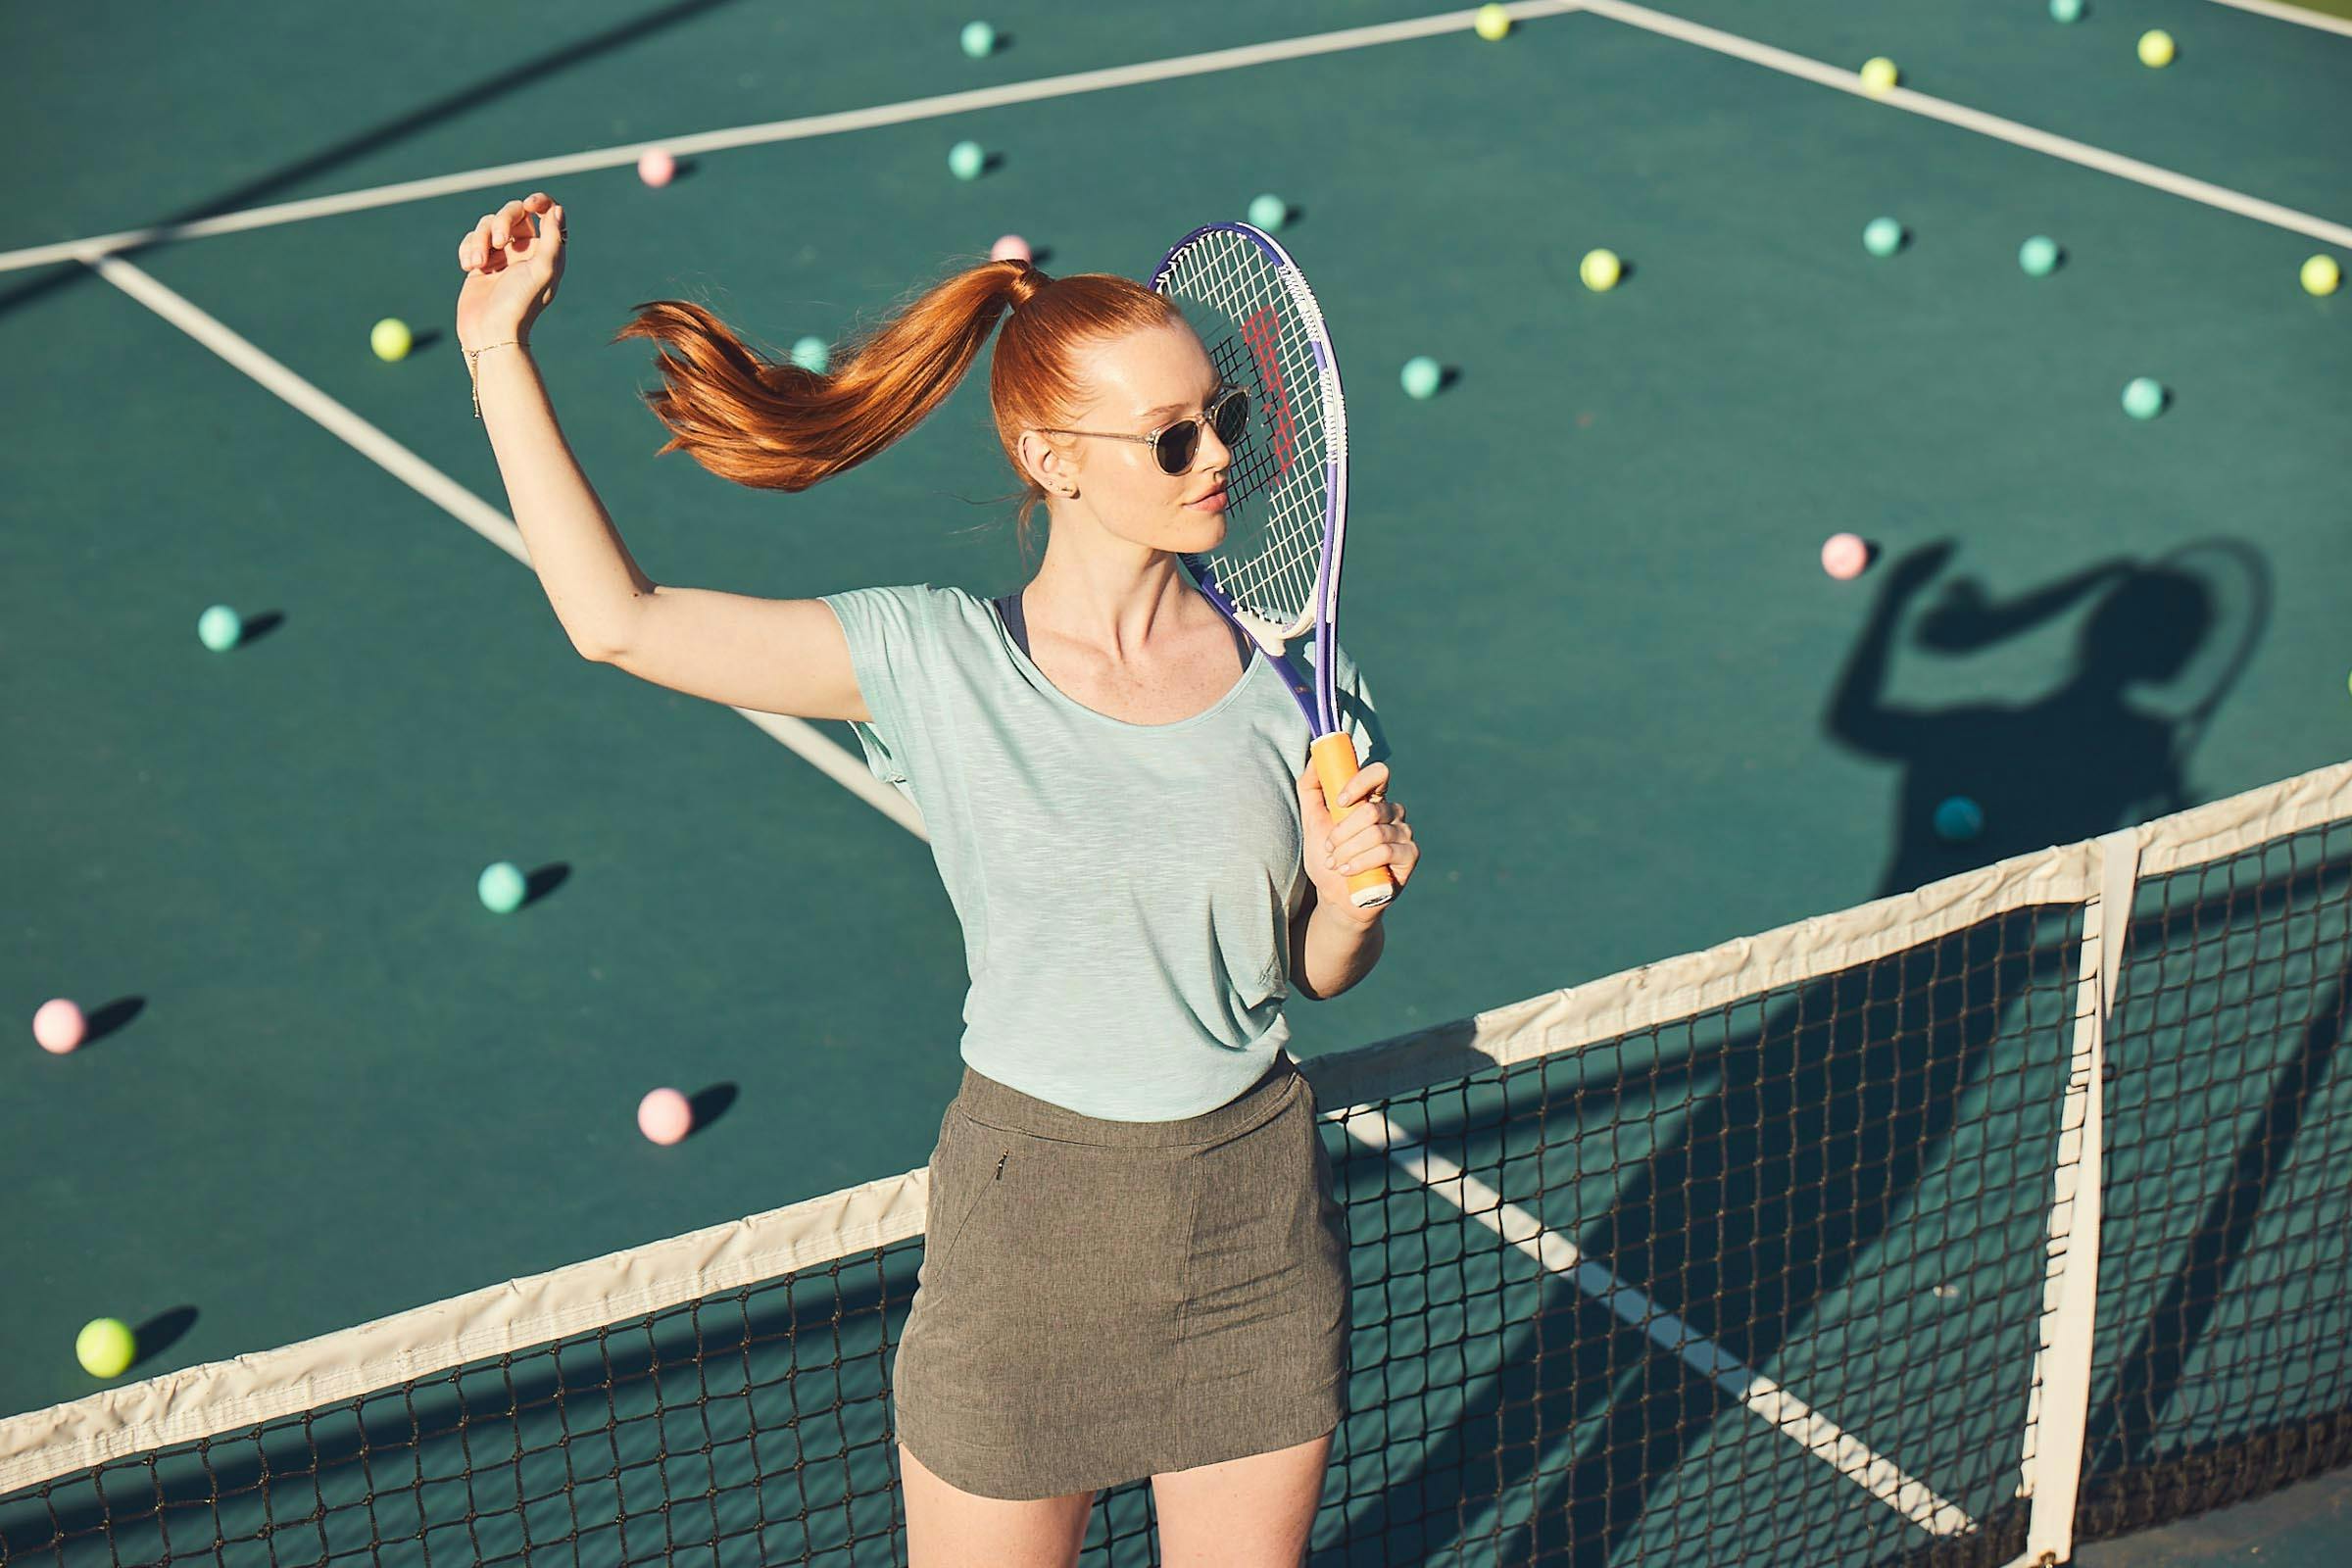 Woman Holding a Tennis Racket on a Tennis Court Littered with Tennis Balls